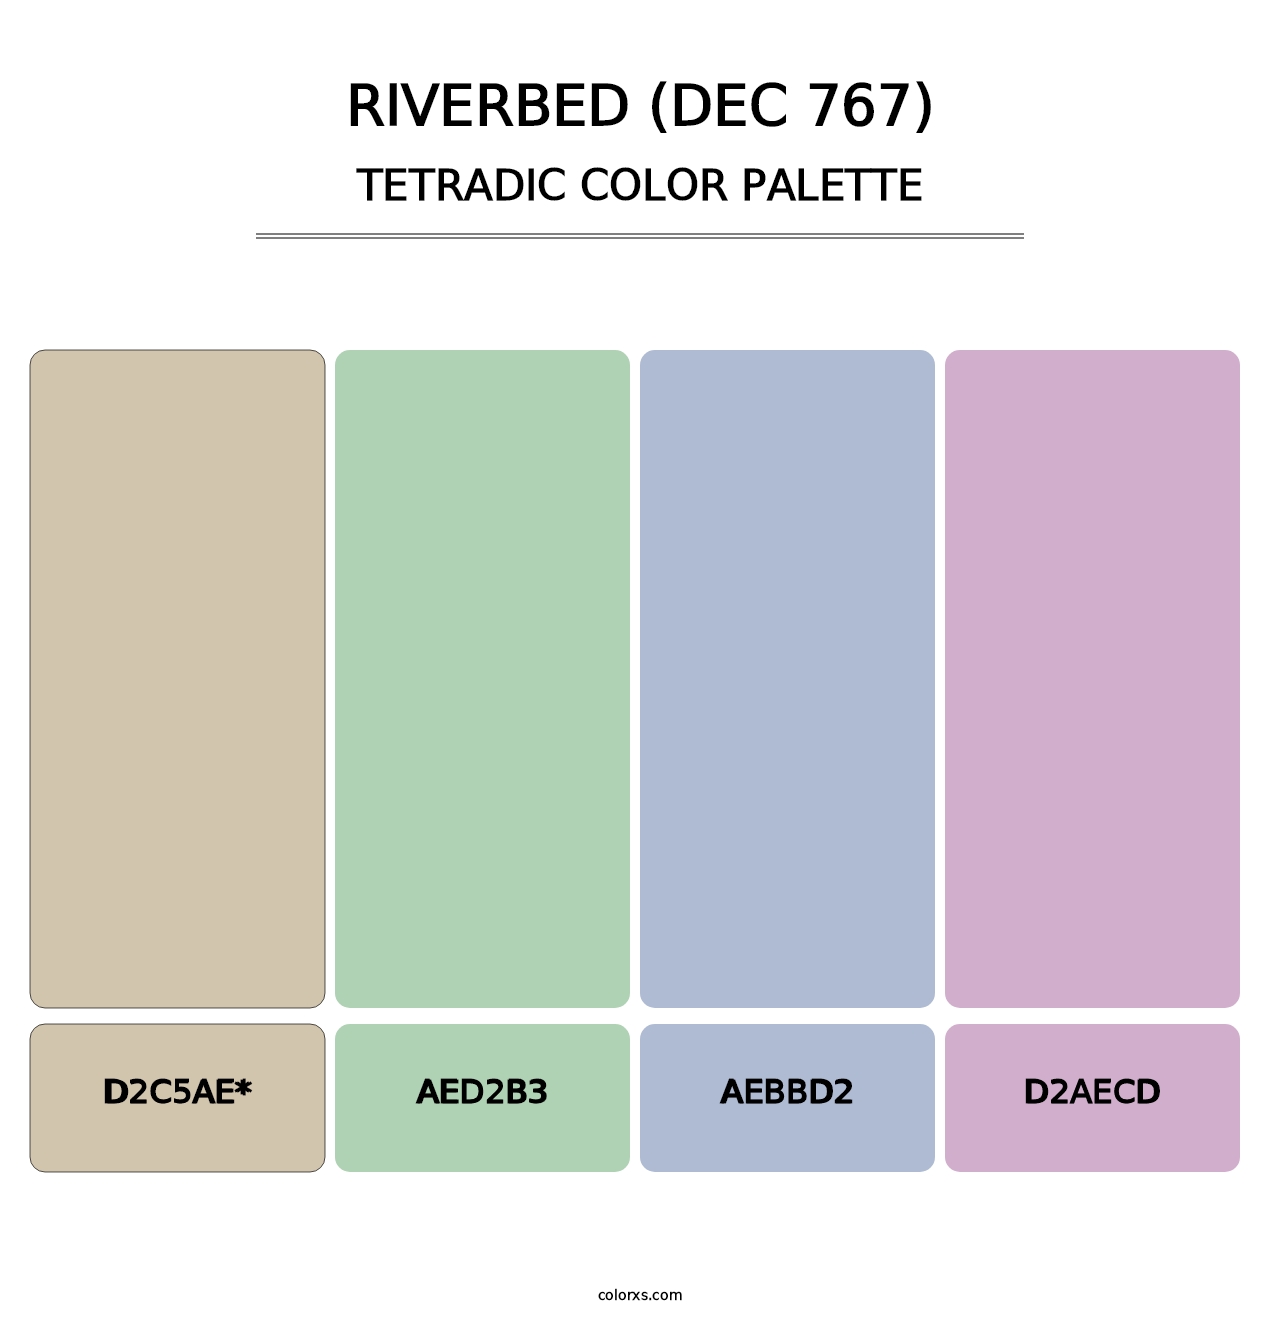 Riverbed (DEC 767) - Tetradic Color Palette